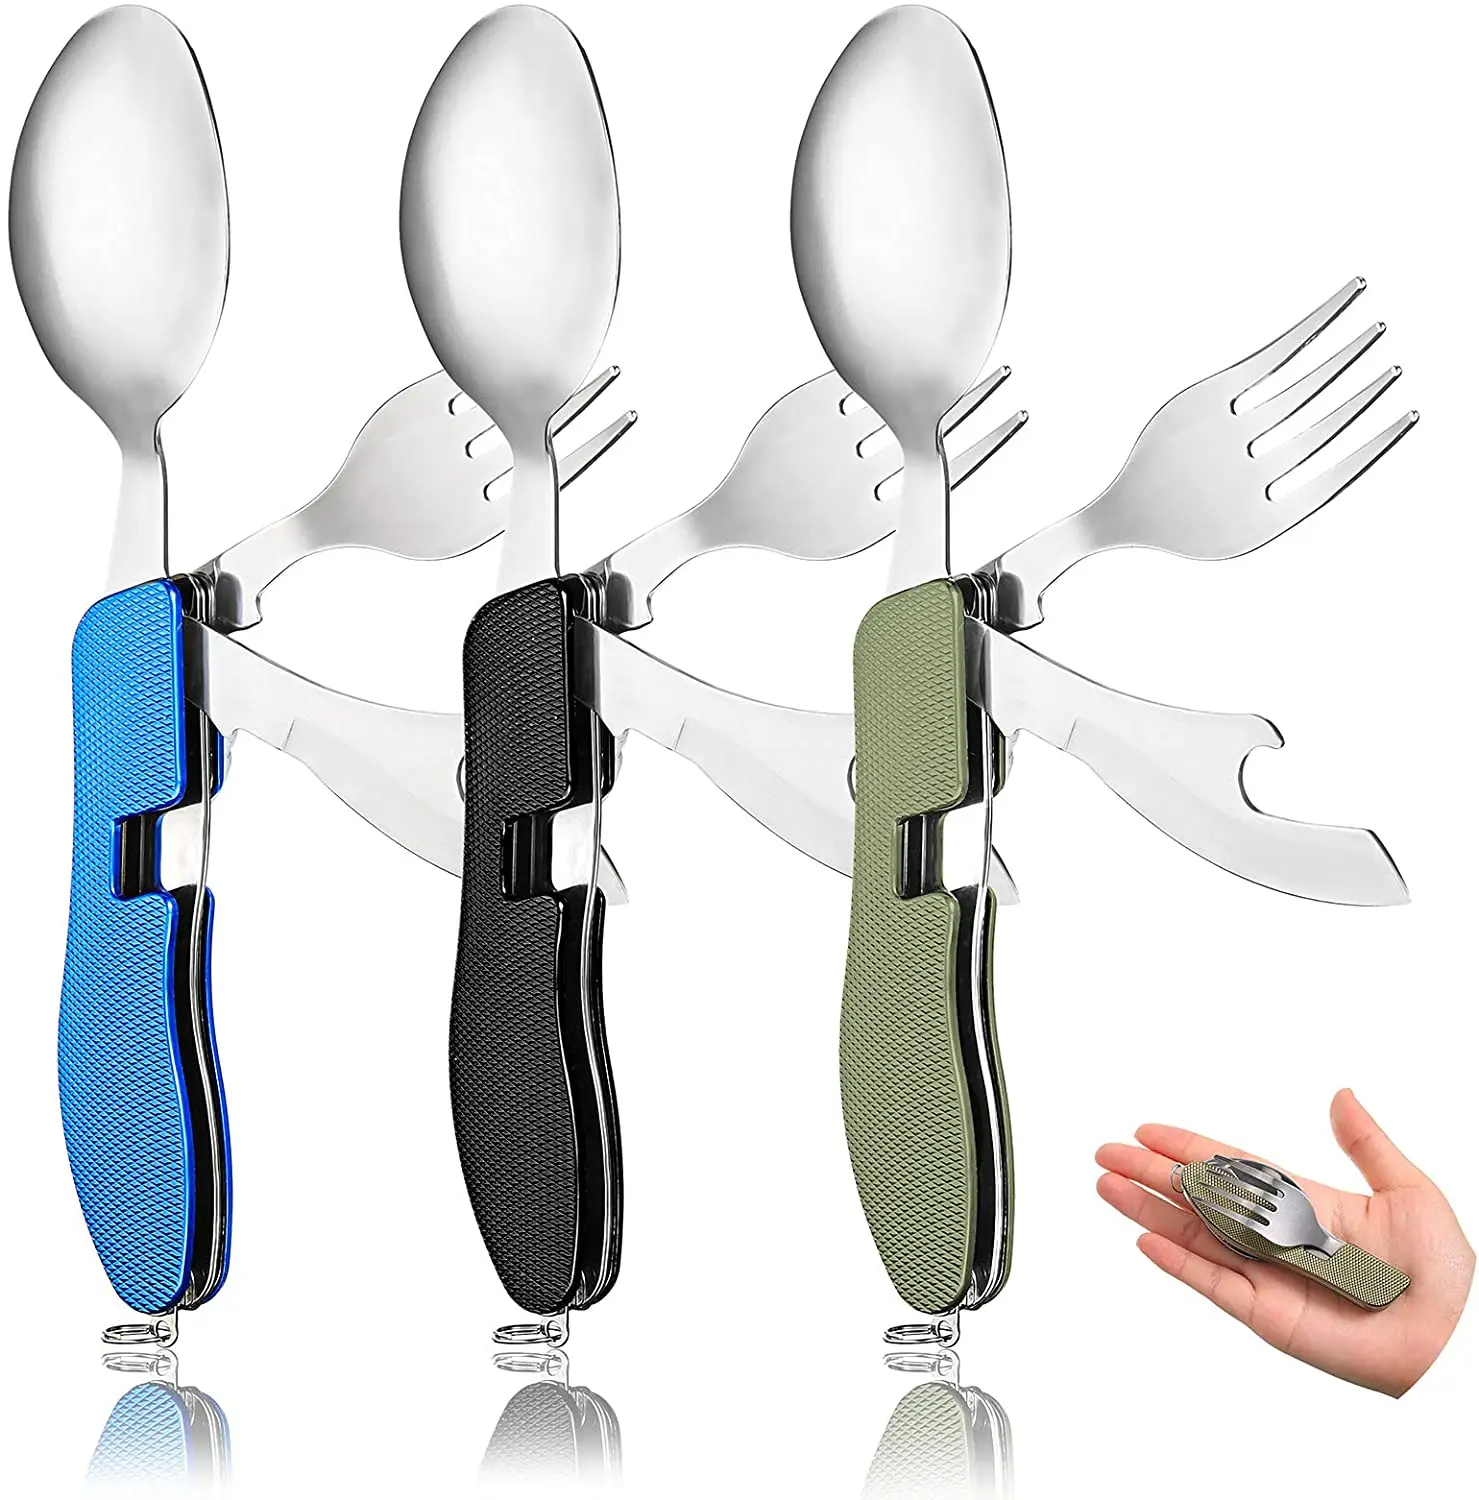 

4-in-1 Camping Utensils Stainless Steel Travel Cutlery Set Spoon Fork Knife Bottle Opener, Green/yellow/red/black/blue